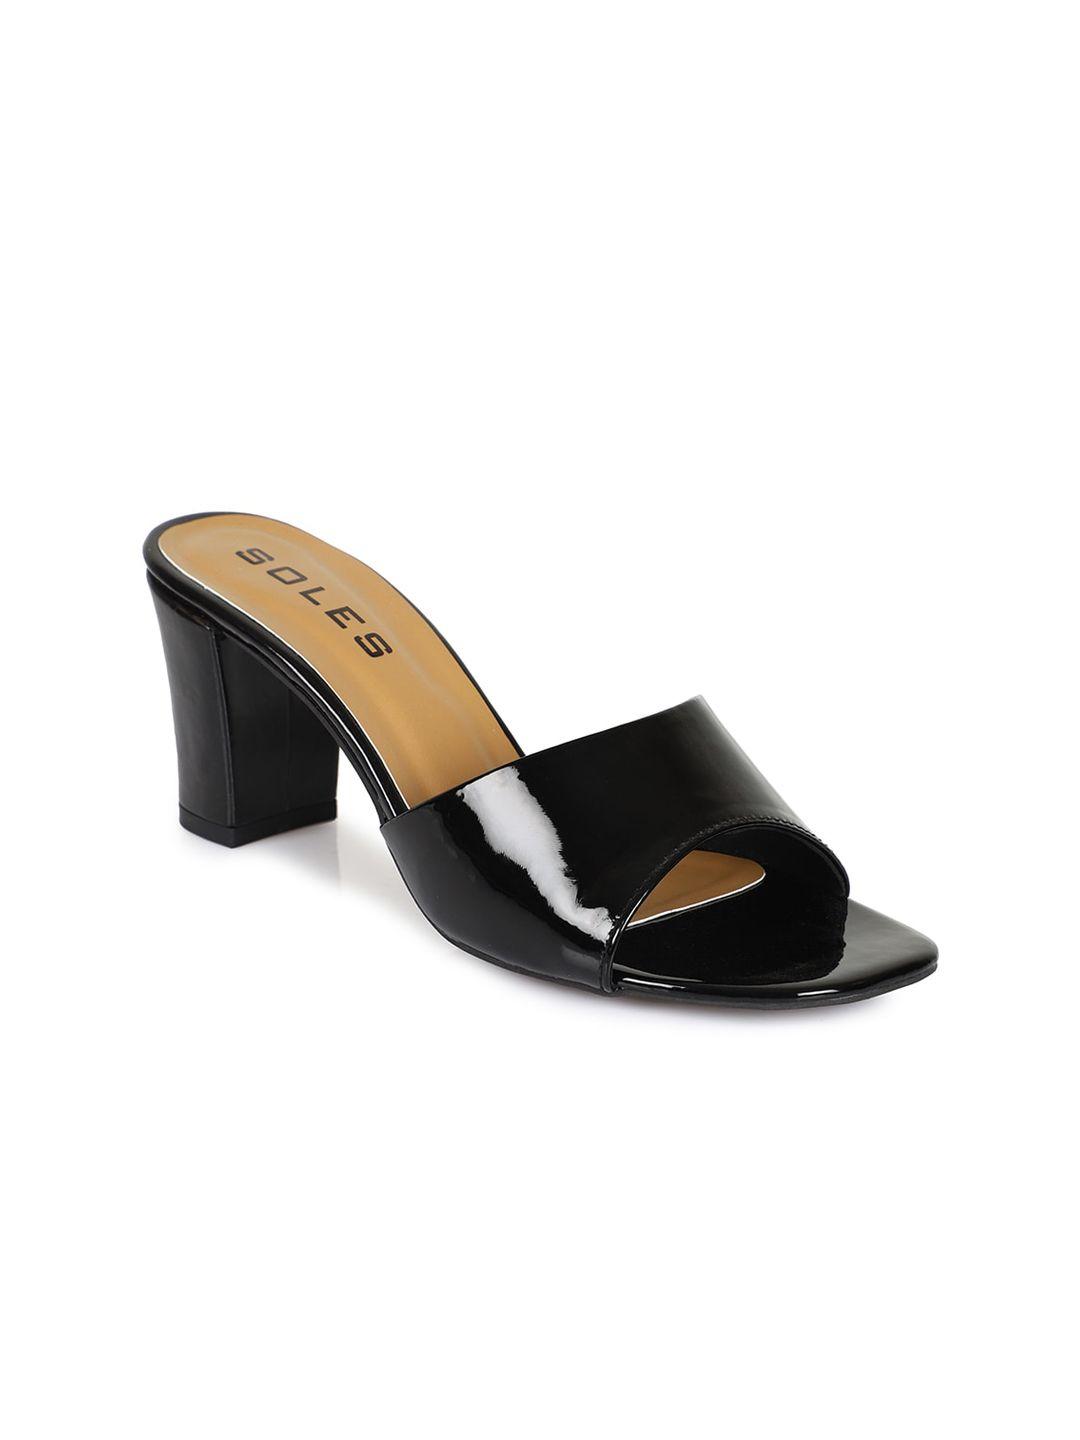 soles-black-block-sandals